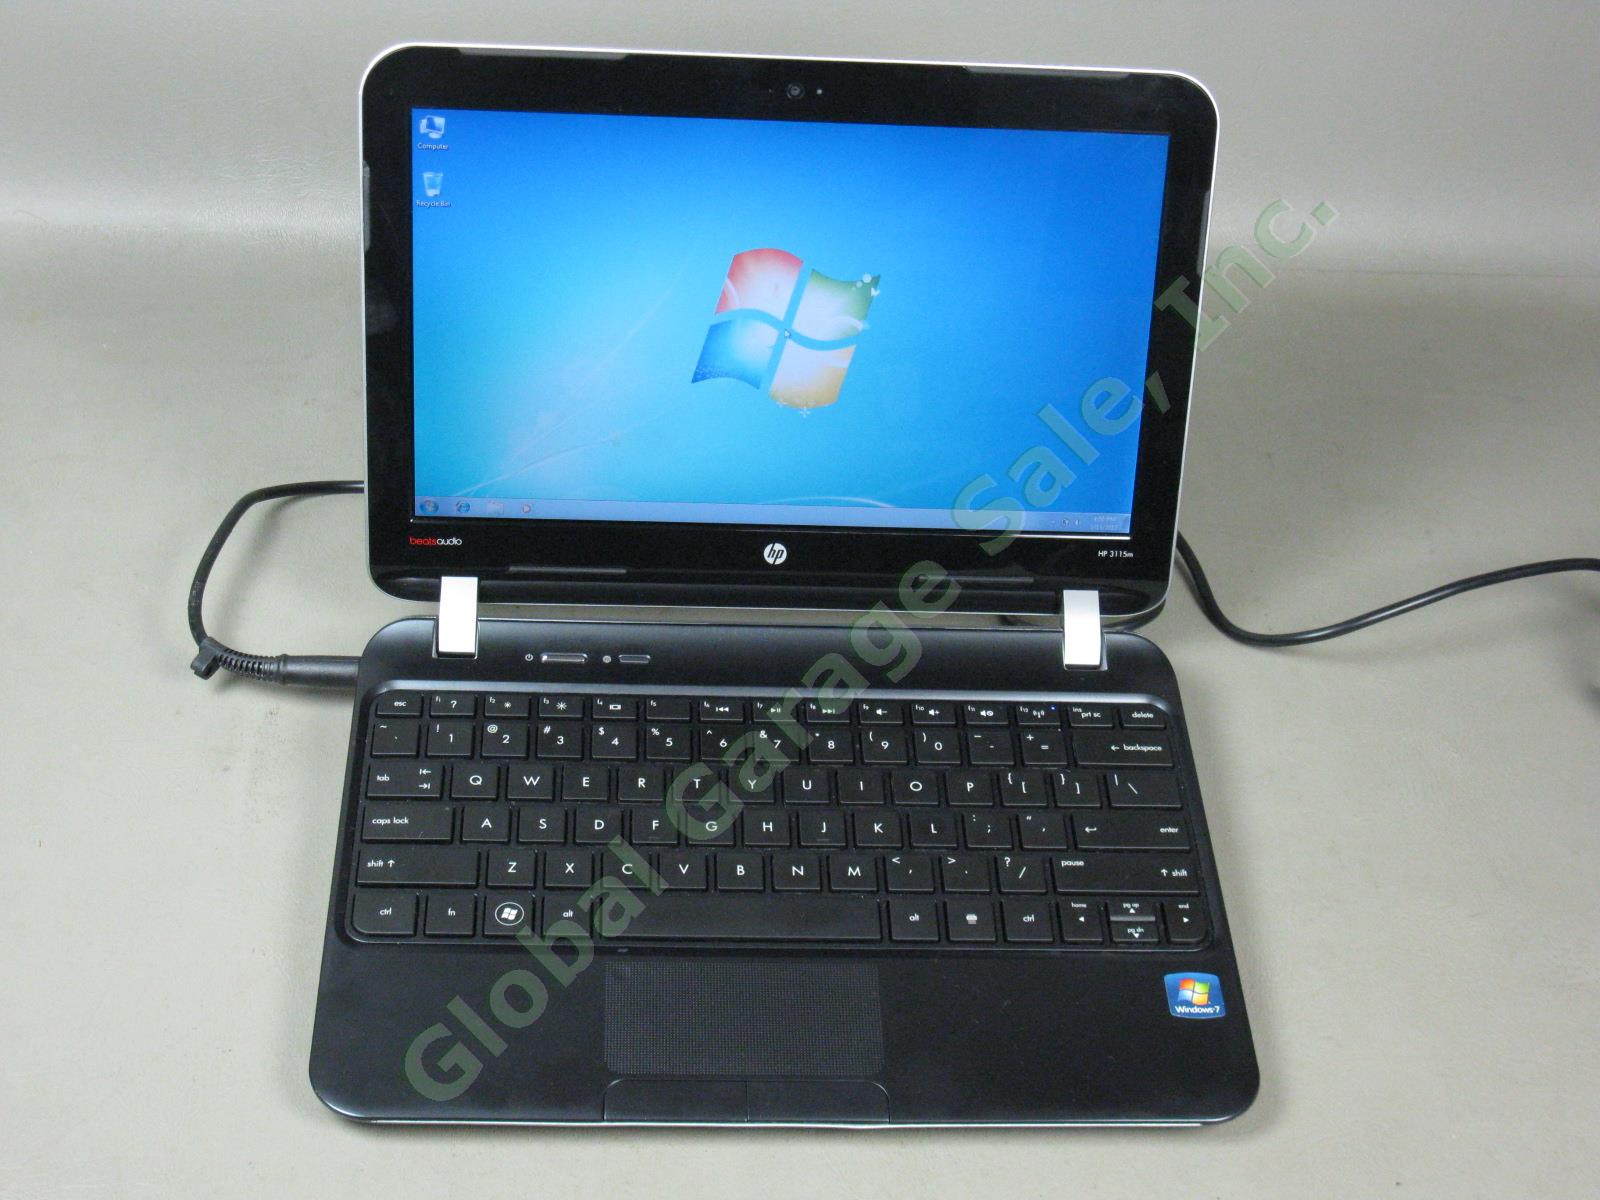 HP 3115m Notebook Laptop AMD E-450 1.65GHz 4GB 320GB Win 7 Ult 64 Bit Beats Aud